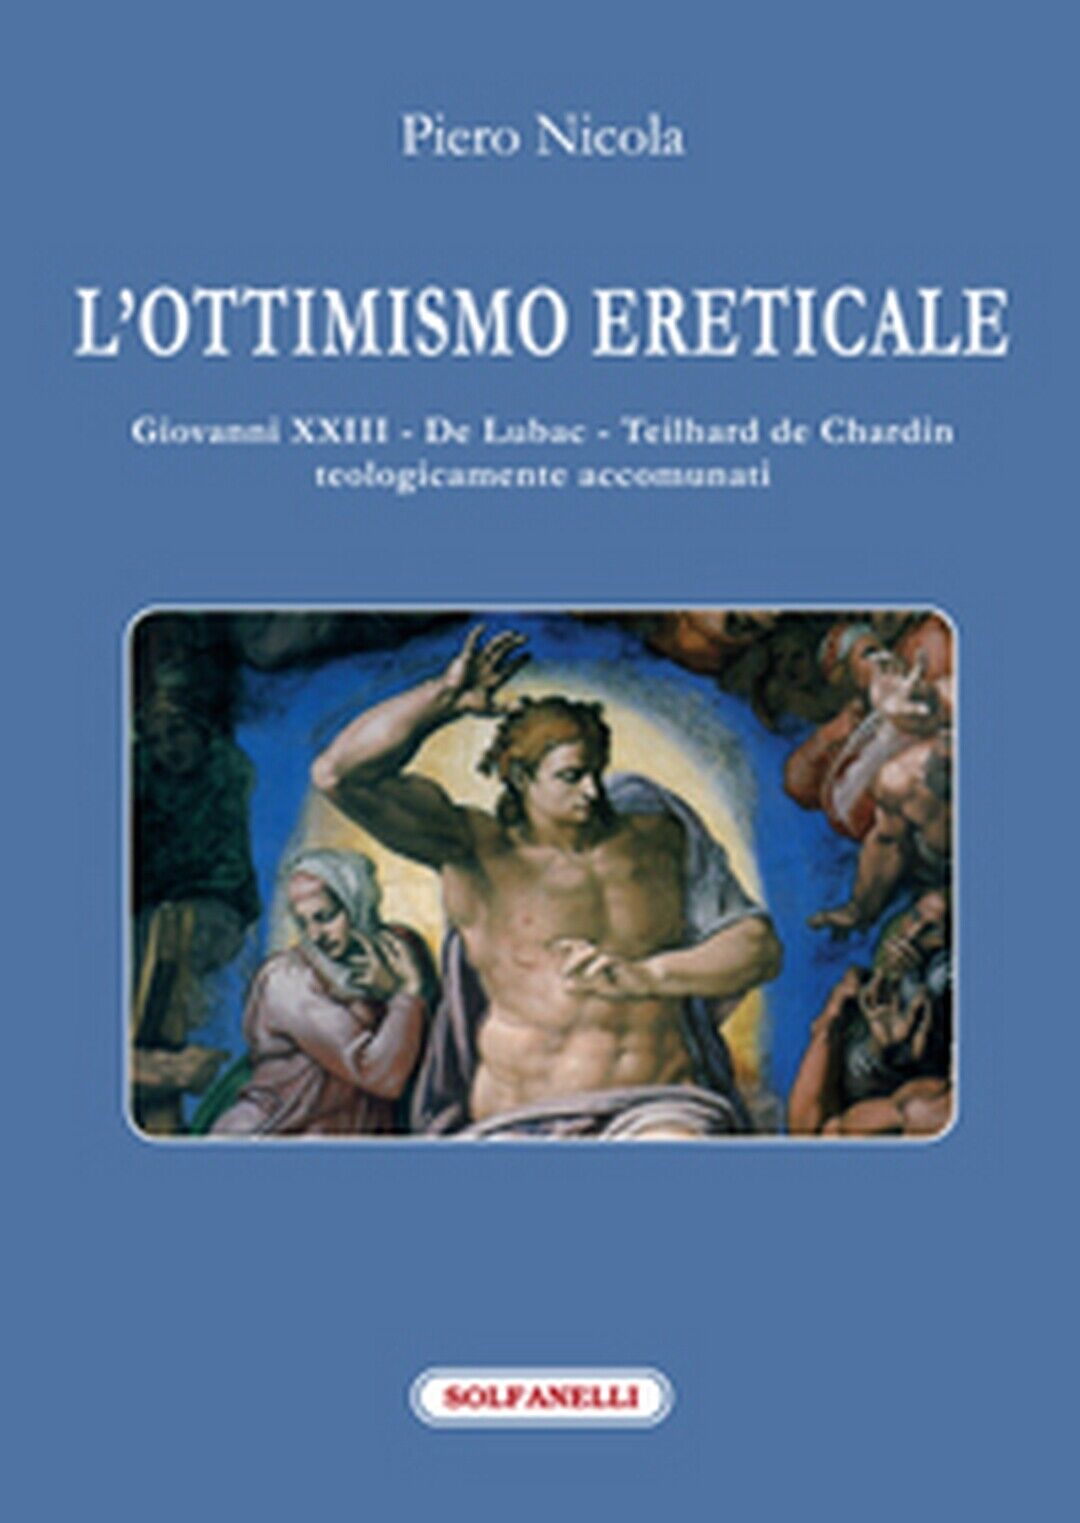 L'OTTIMISMO ERETICALE Giovanni XXIII - De Lubac - Teilhard de Chardin 